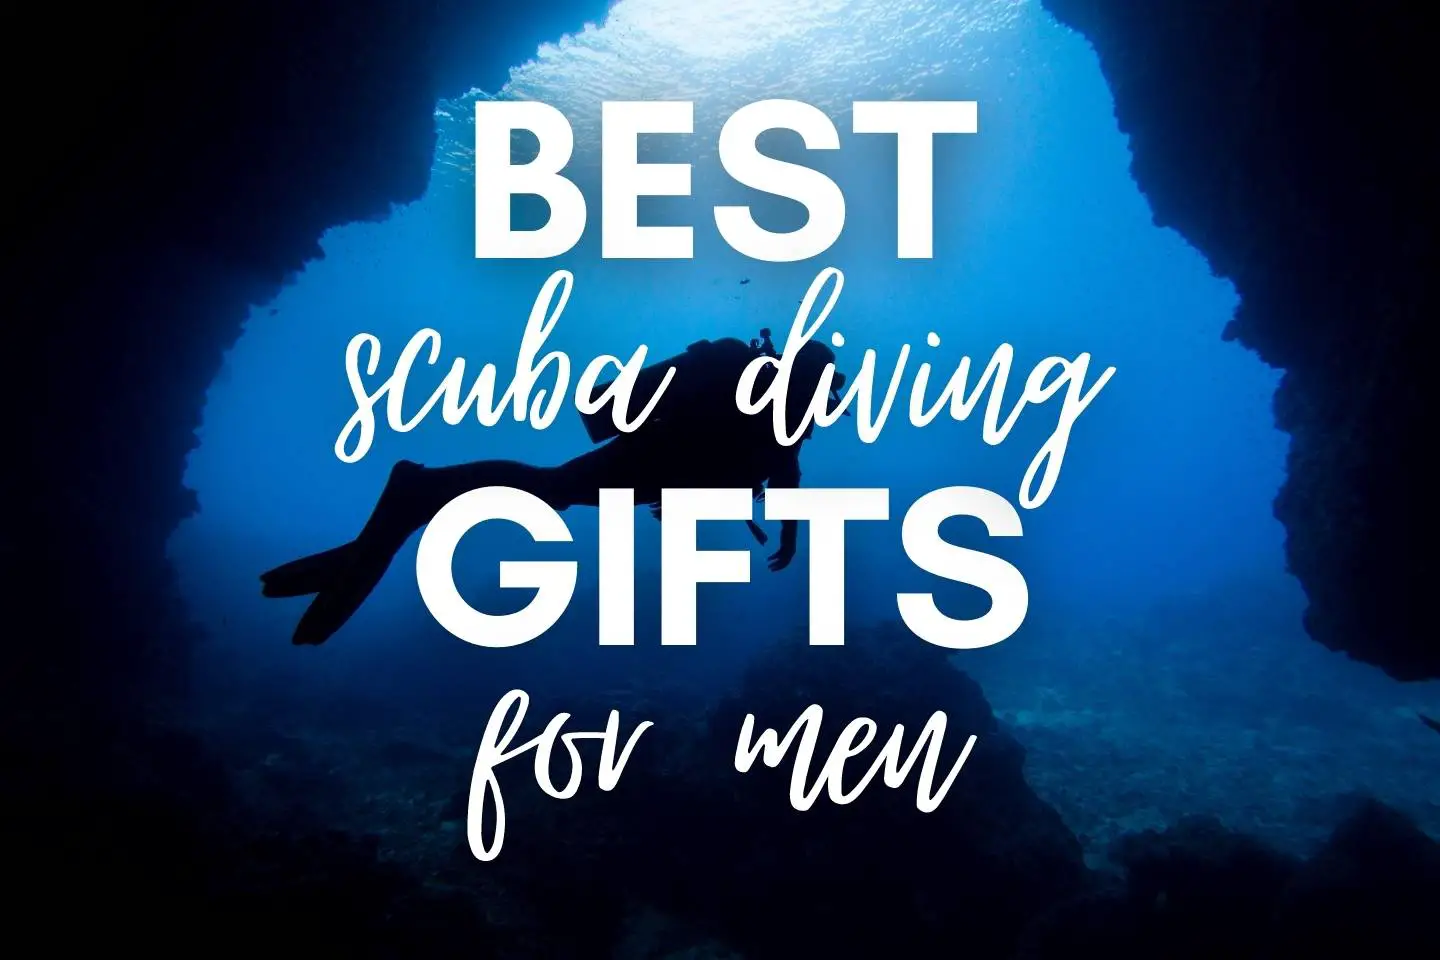 Best scuba diving gifts for men